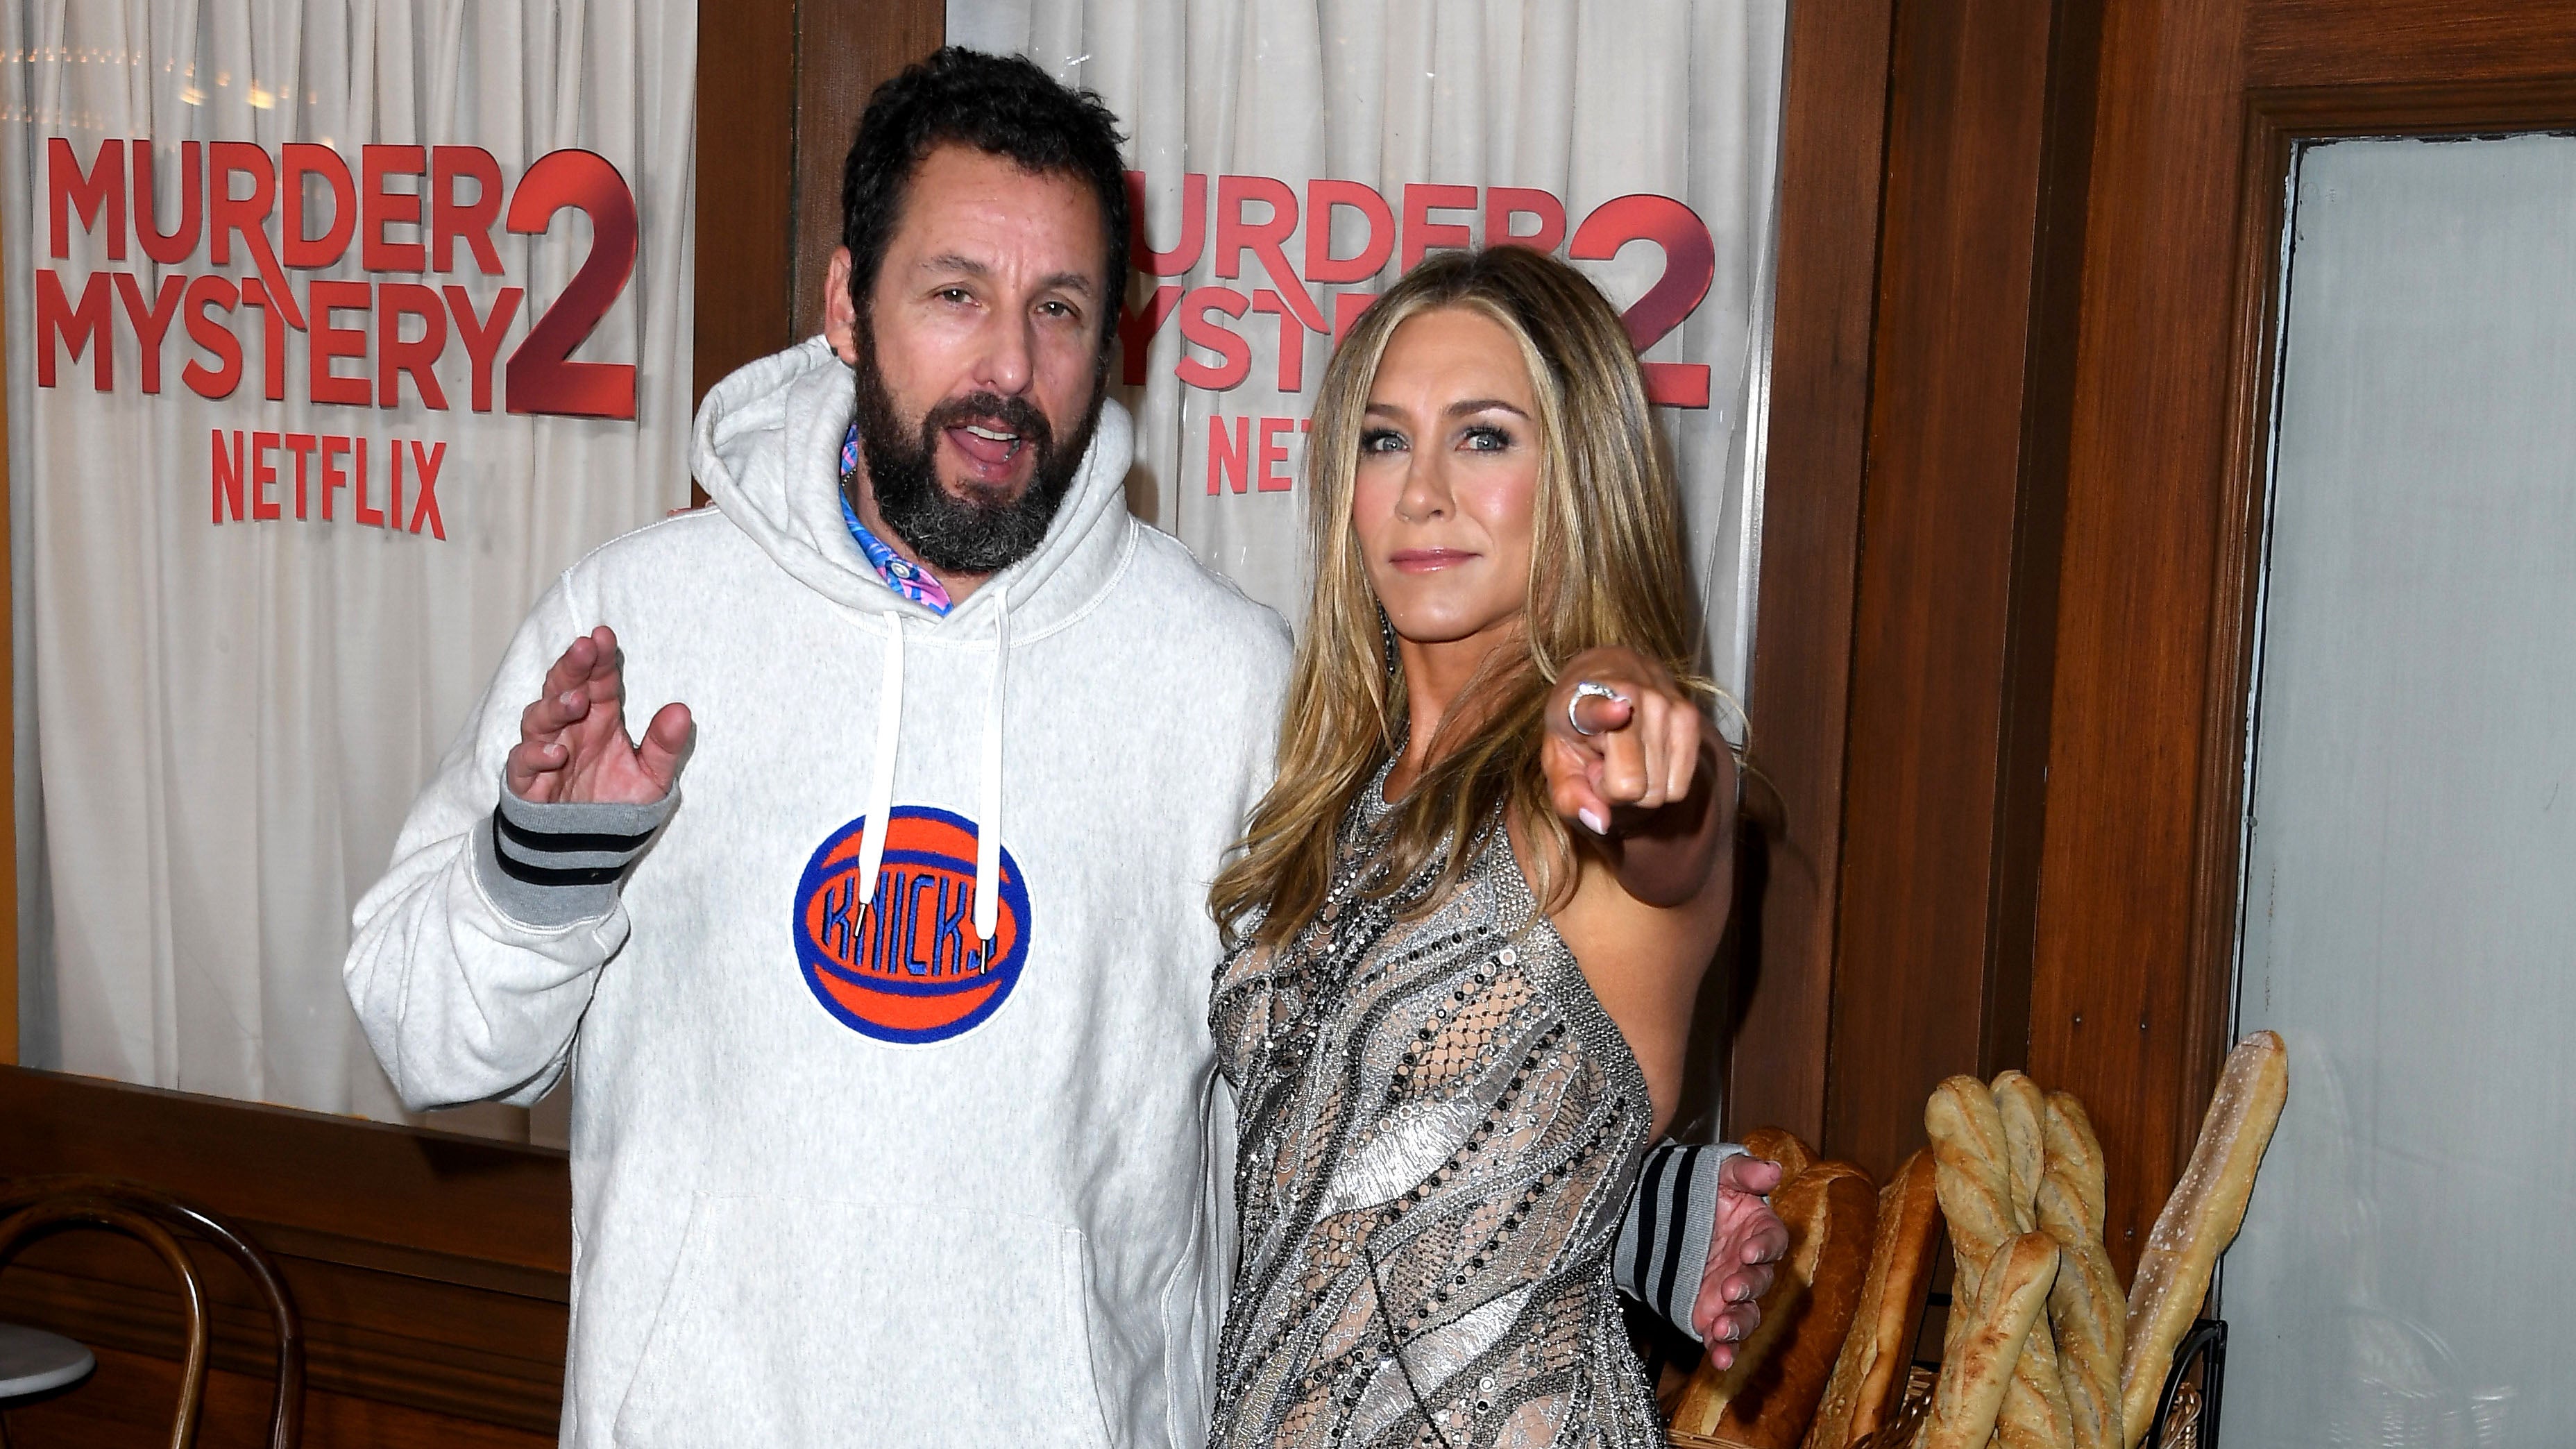 Jennifer Aniston Spotted Promoting Film 'Murder Mystery': Photos